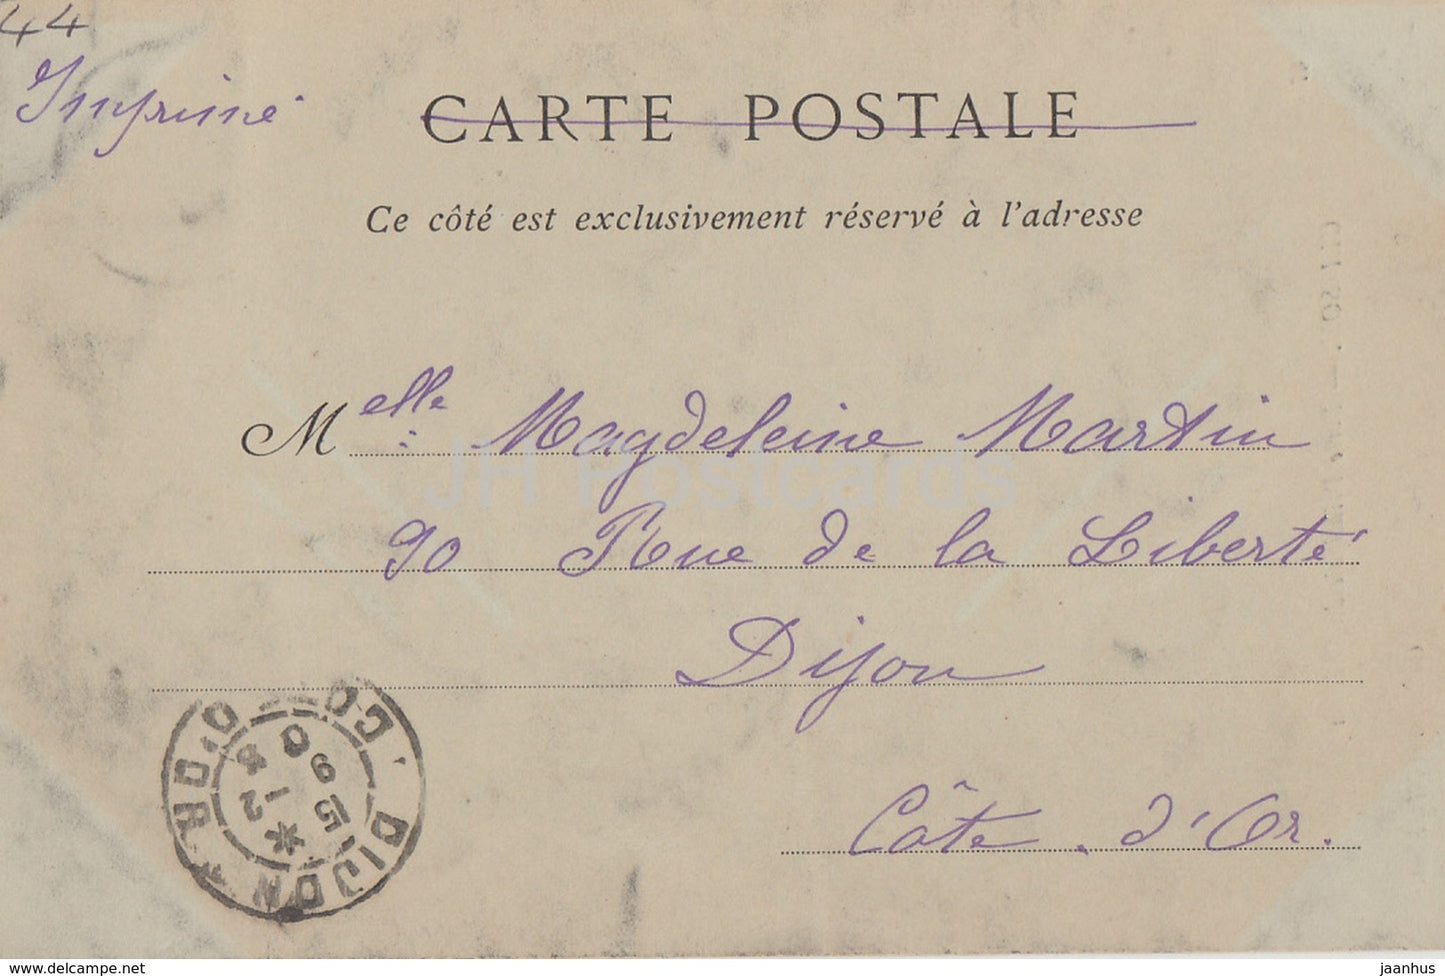 Clisson - Porte Principale du Chateau - castle - 47 - old postcard - 1903 - France - used